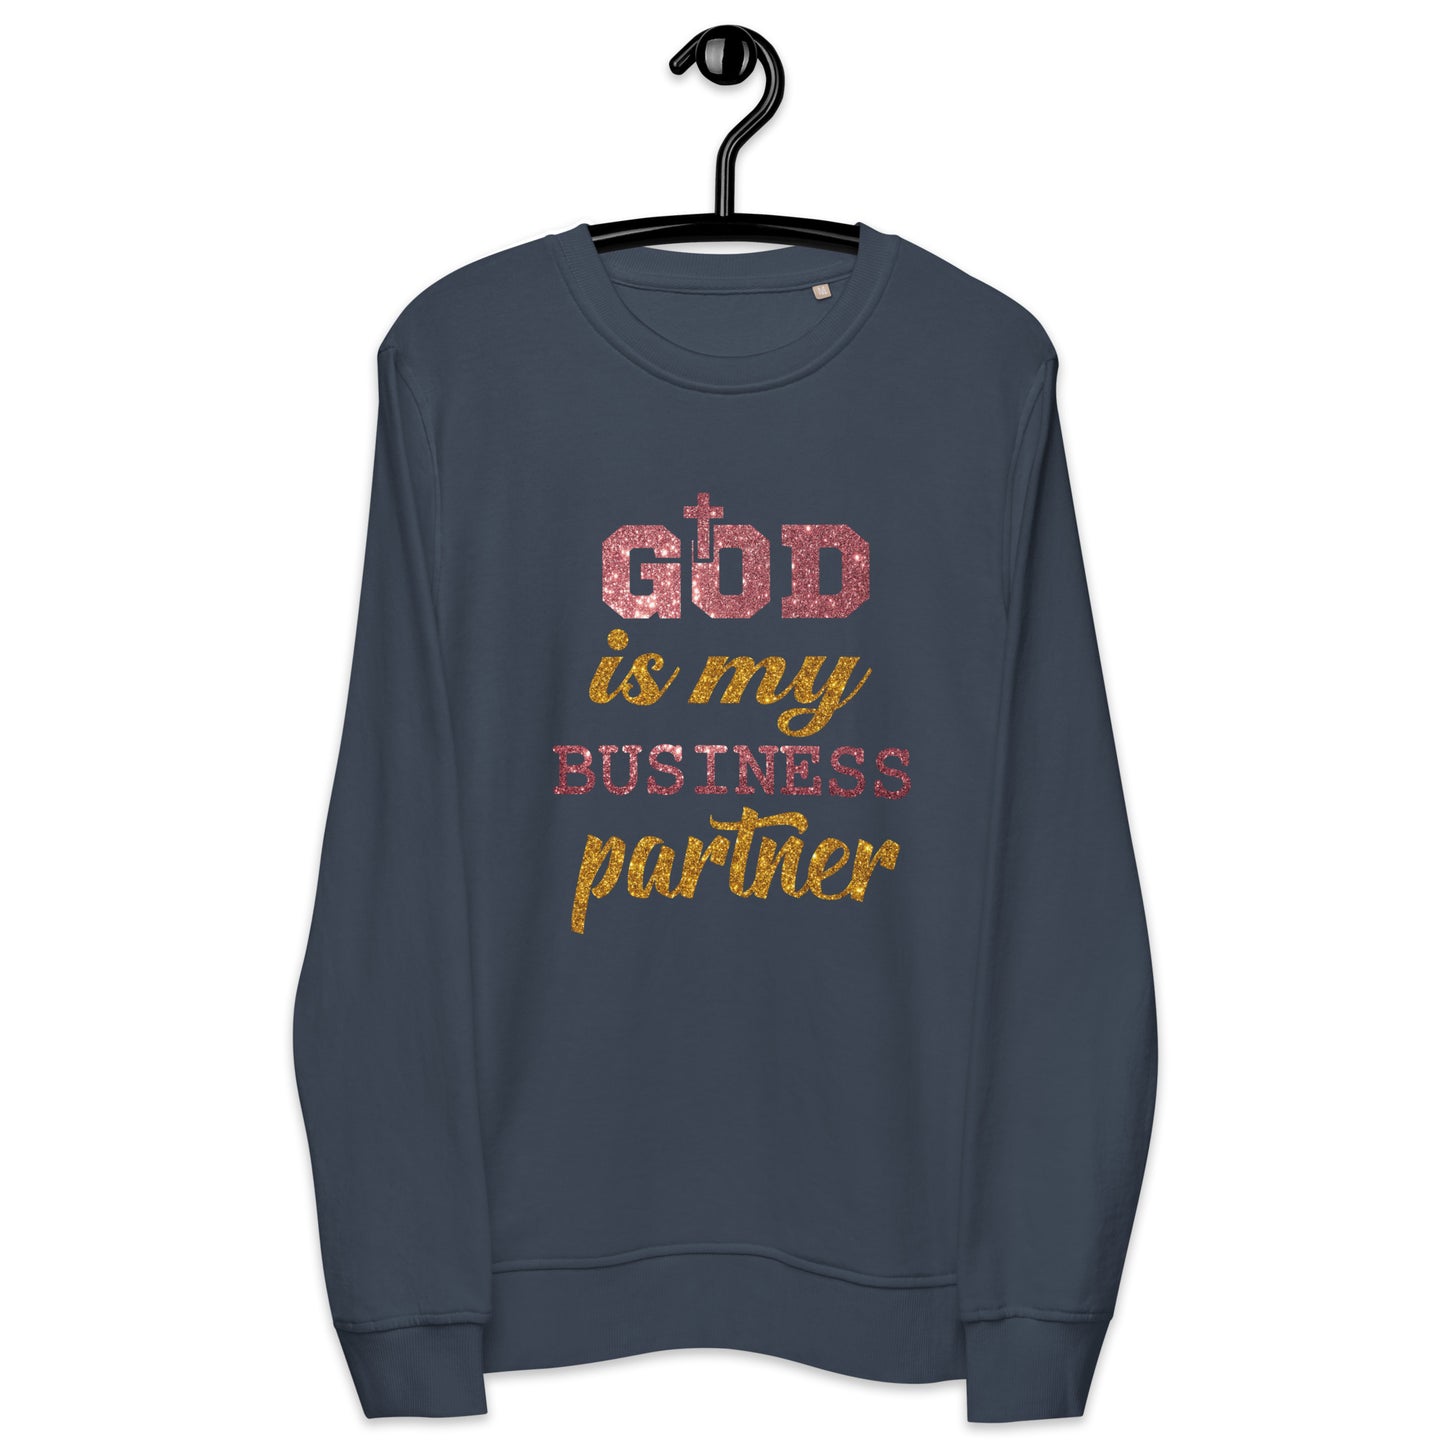 Inspire Me|God is My Business Partner|Unisex Organic Sweatshirt